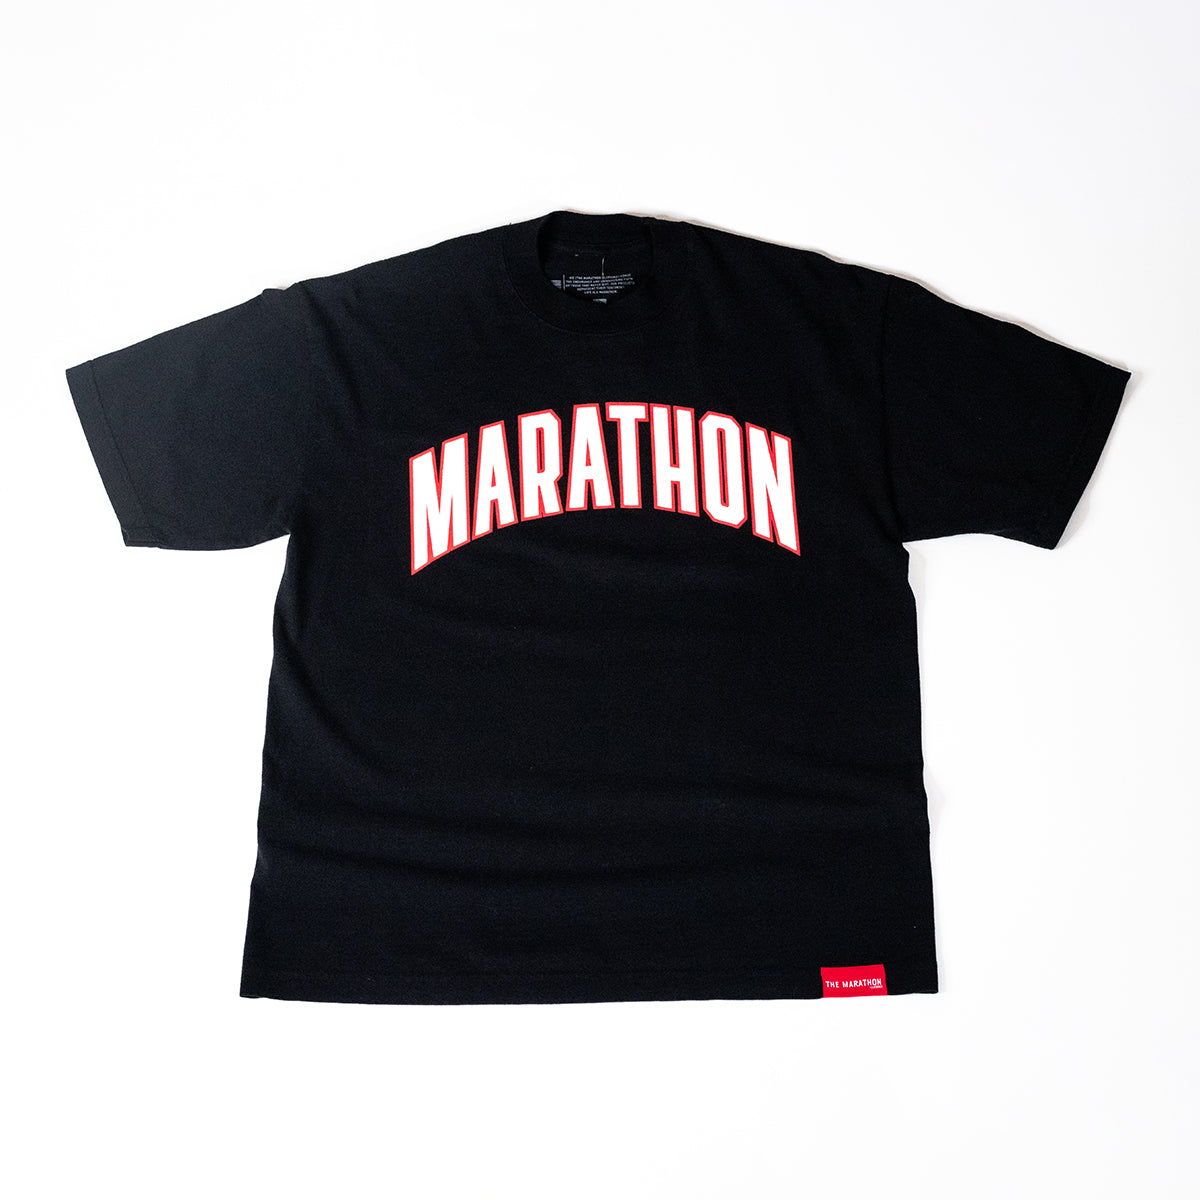 Marathon Varsity T-shirt - Black/White - Front